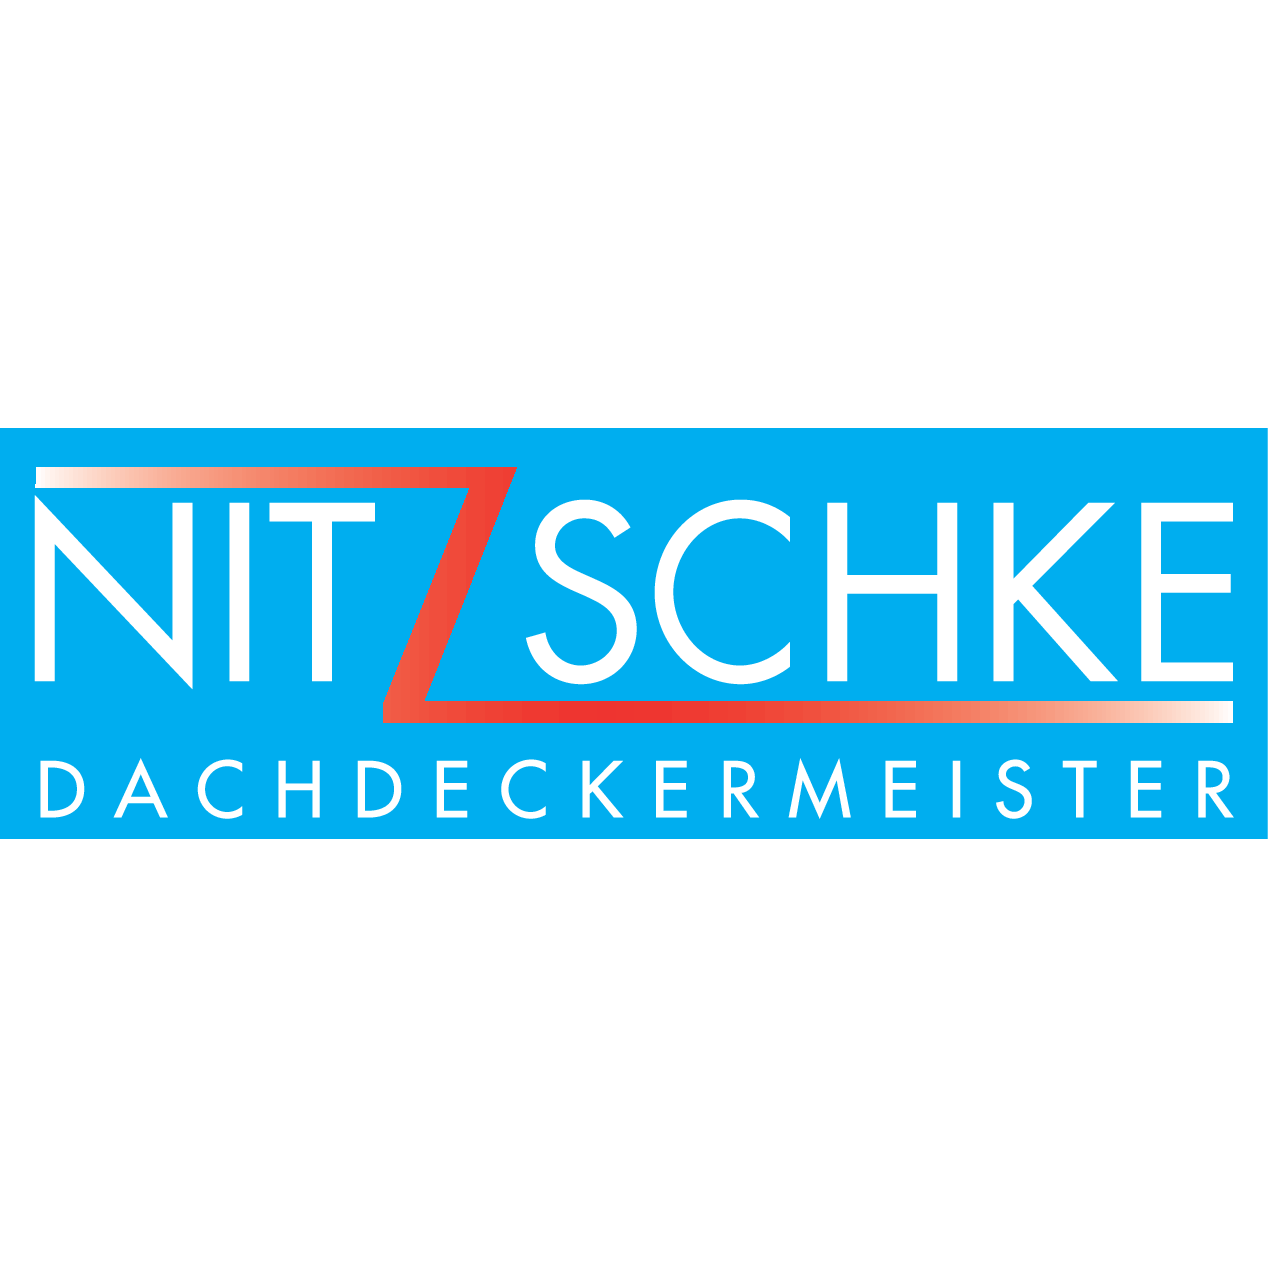 Nitzschke Dachdeckermeister Logo